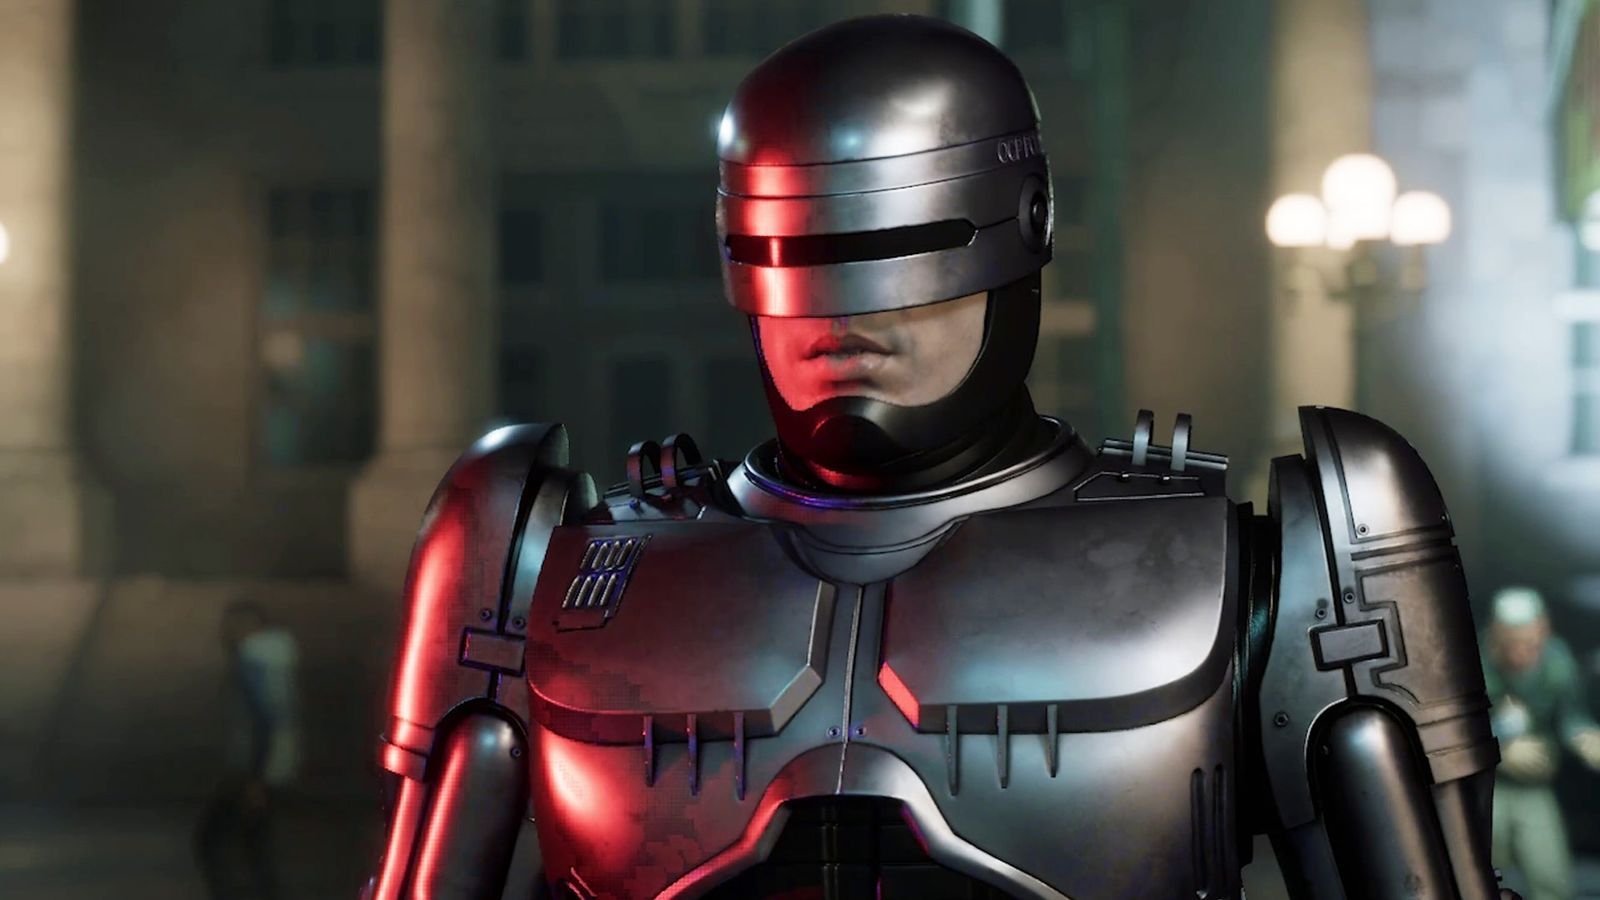 Robocop: Rogue City protagonist Robocop